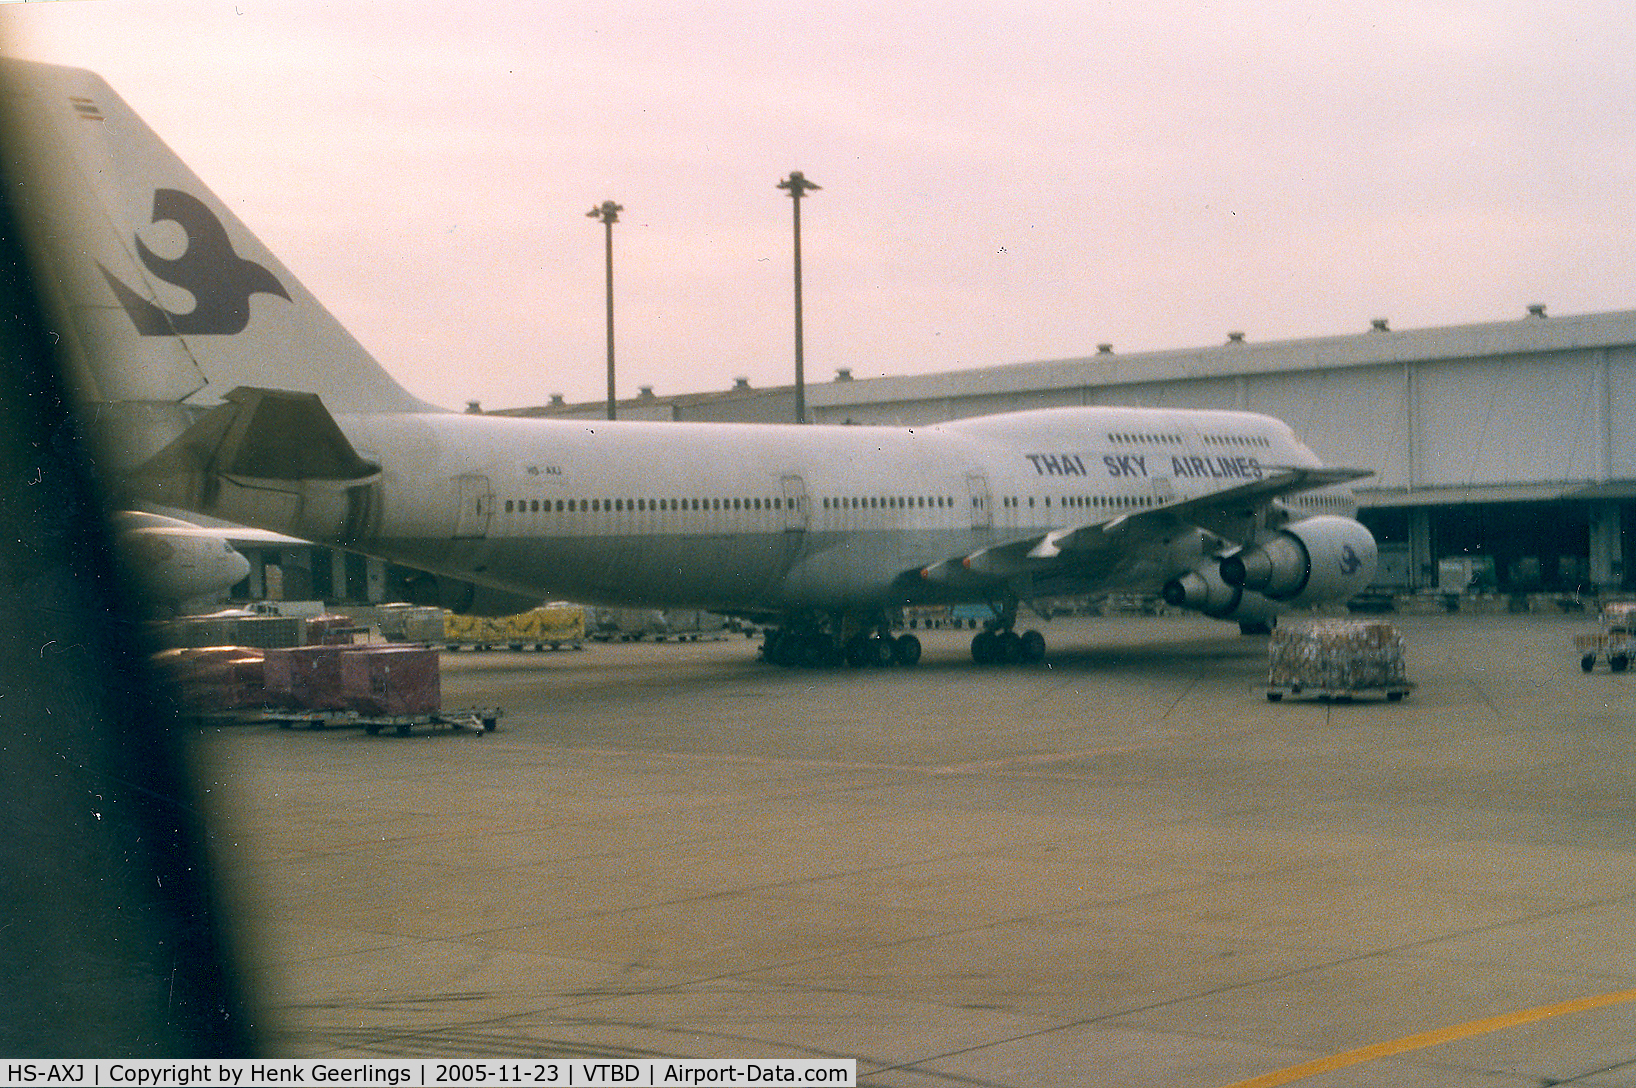 HS-AXJ, 1979 Boeing 747-206B (SUD) C/N 21659, Thai Sky Airlines. ex KLM PH-BUM